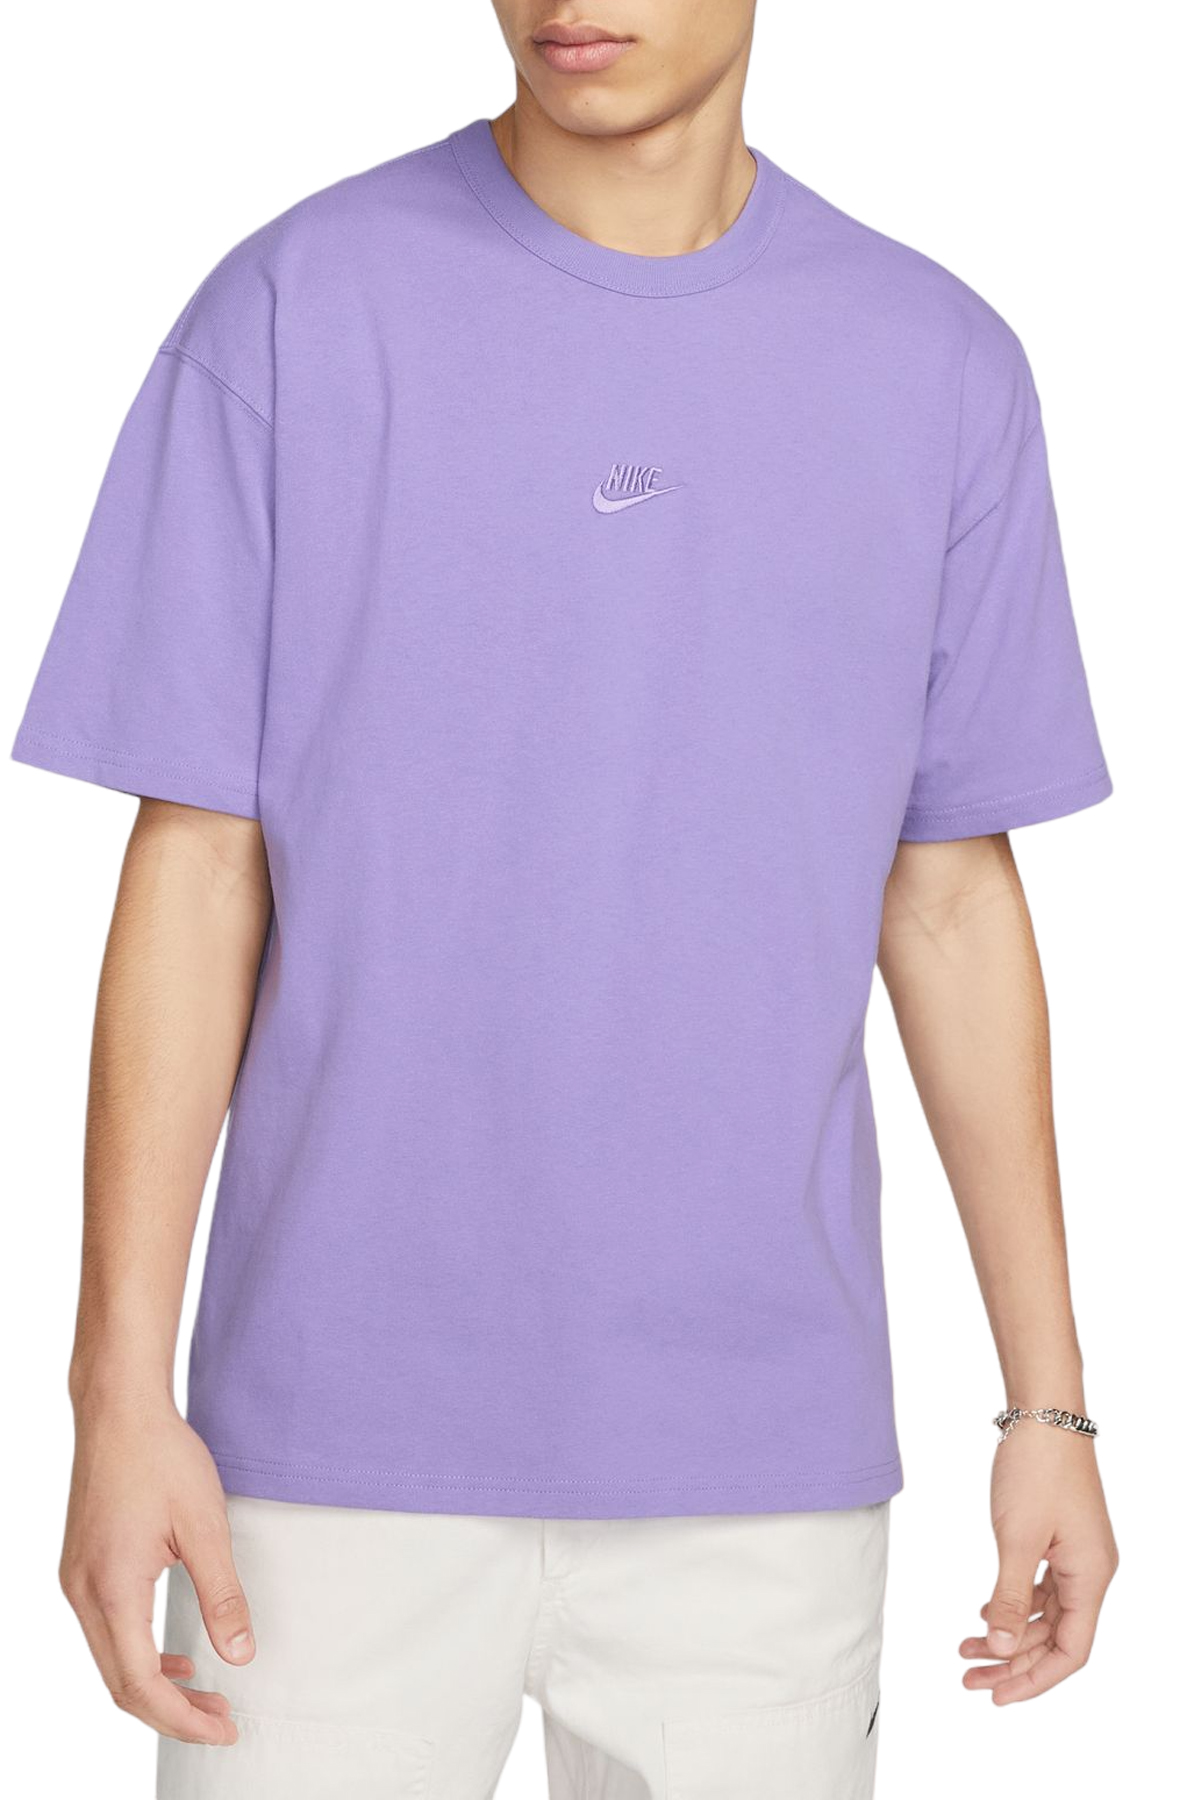 NIKE Nike FAST - Tee-shirt Femme vivid purple/reflective silv